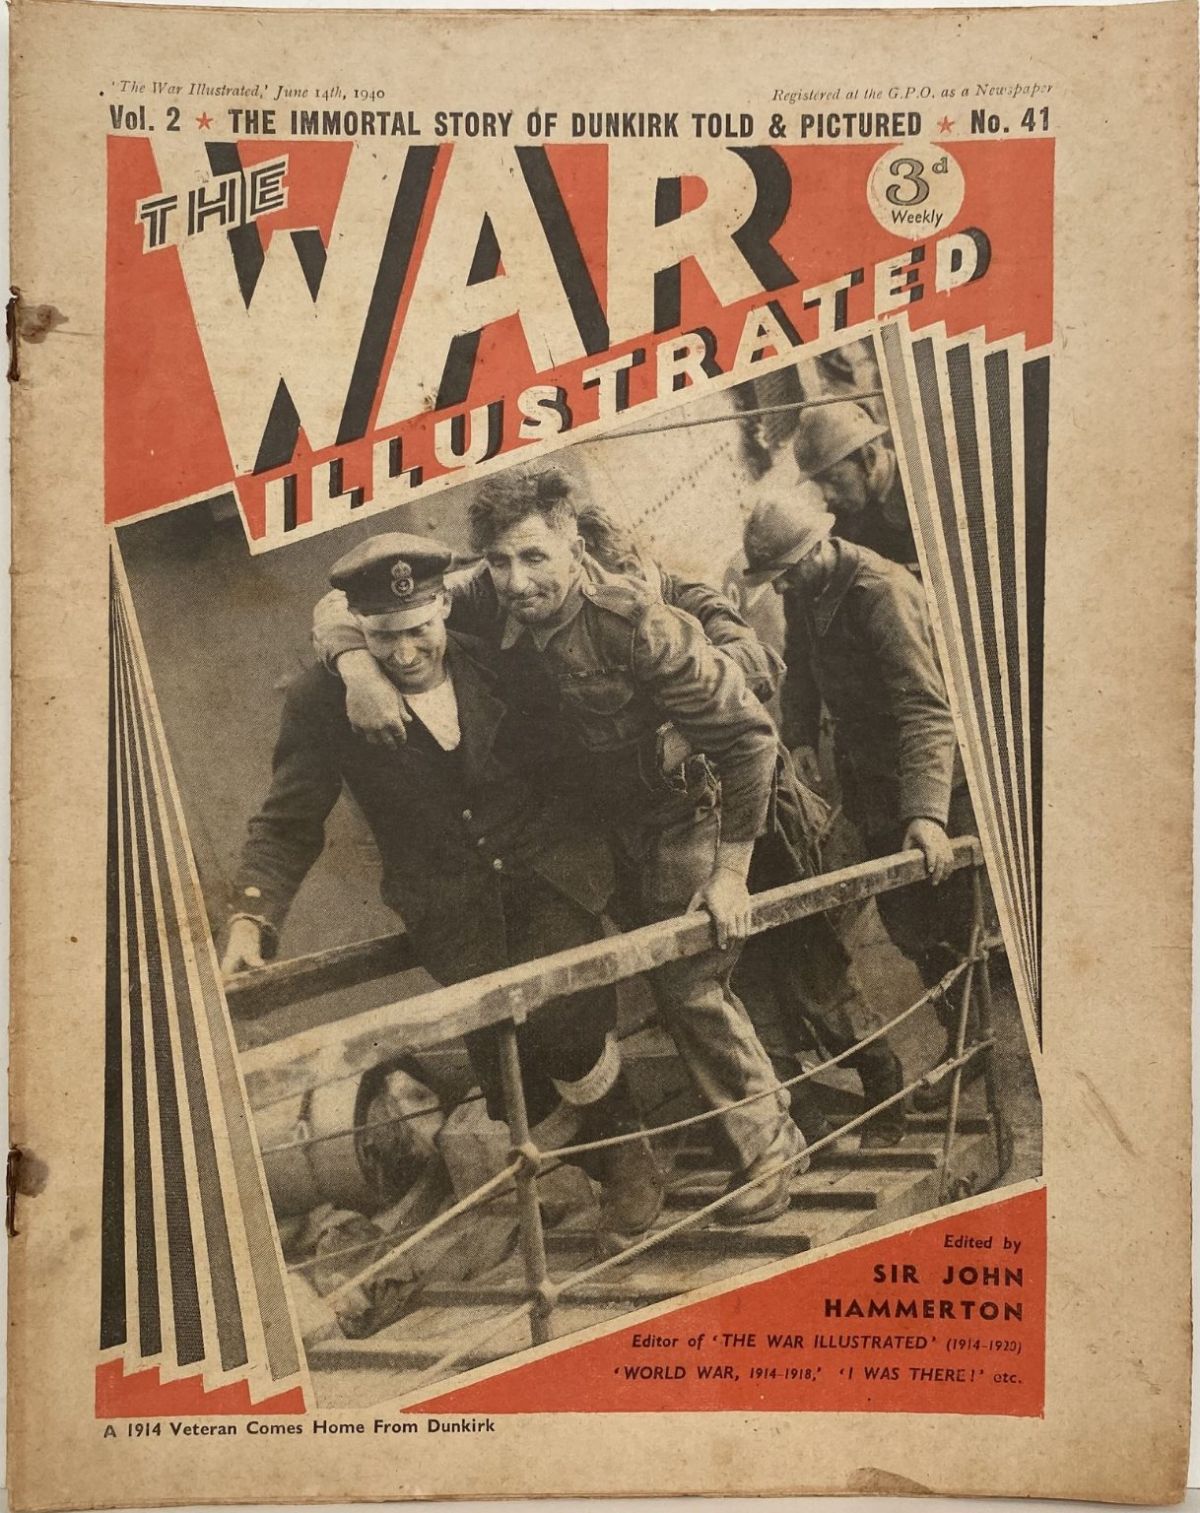 THE WAR ILLUSTRATED - Vol 2, No 41, 14th June 1940